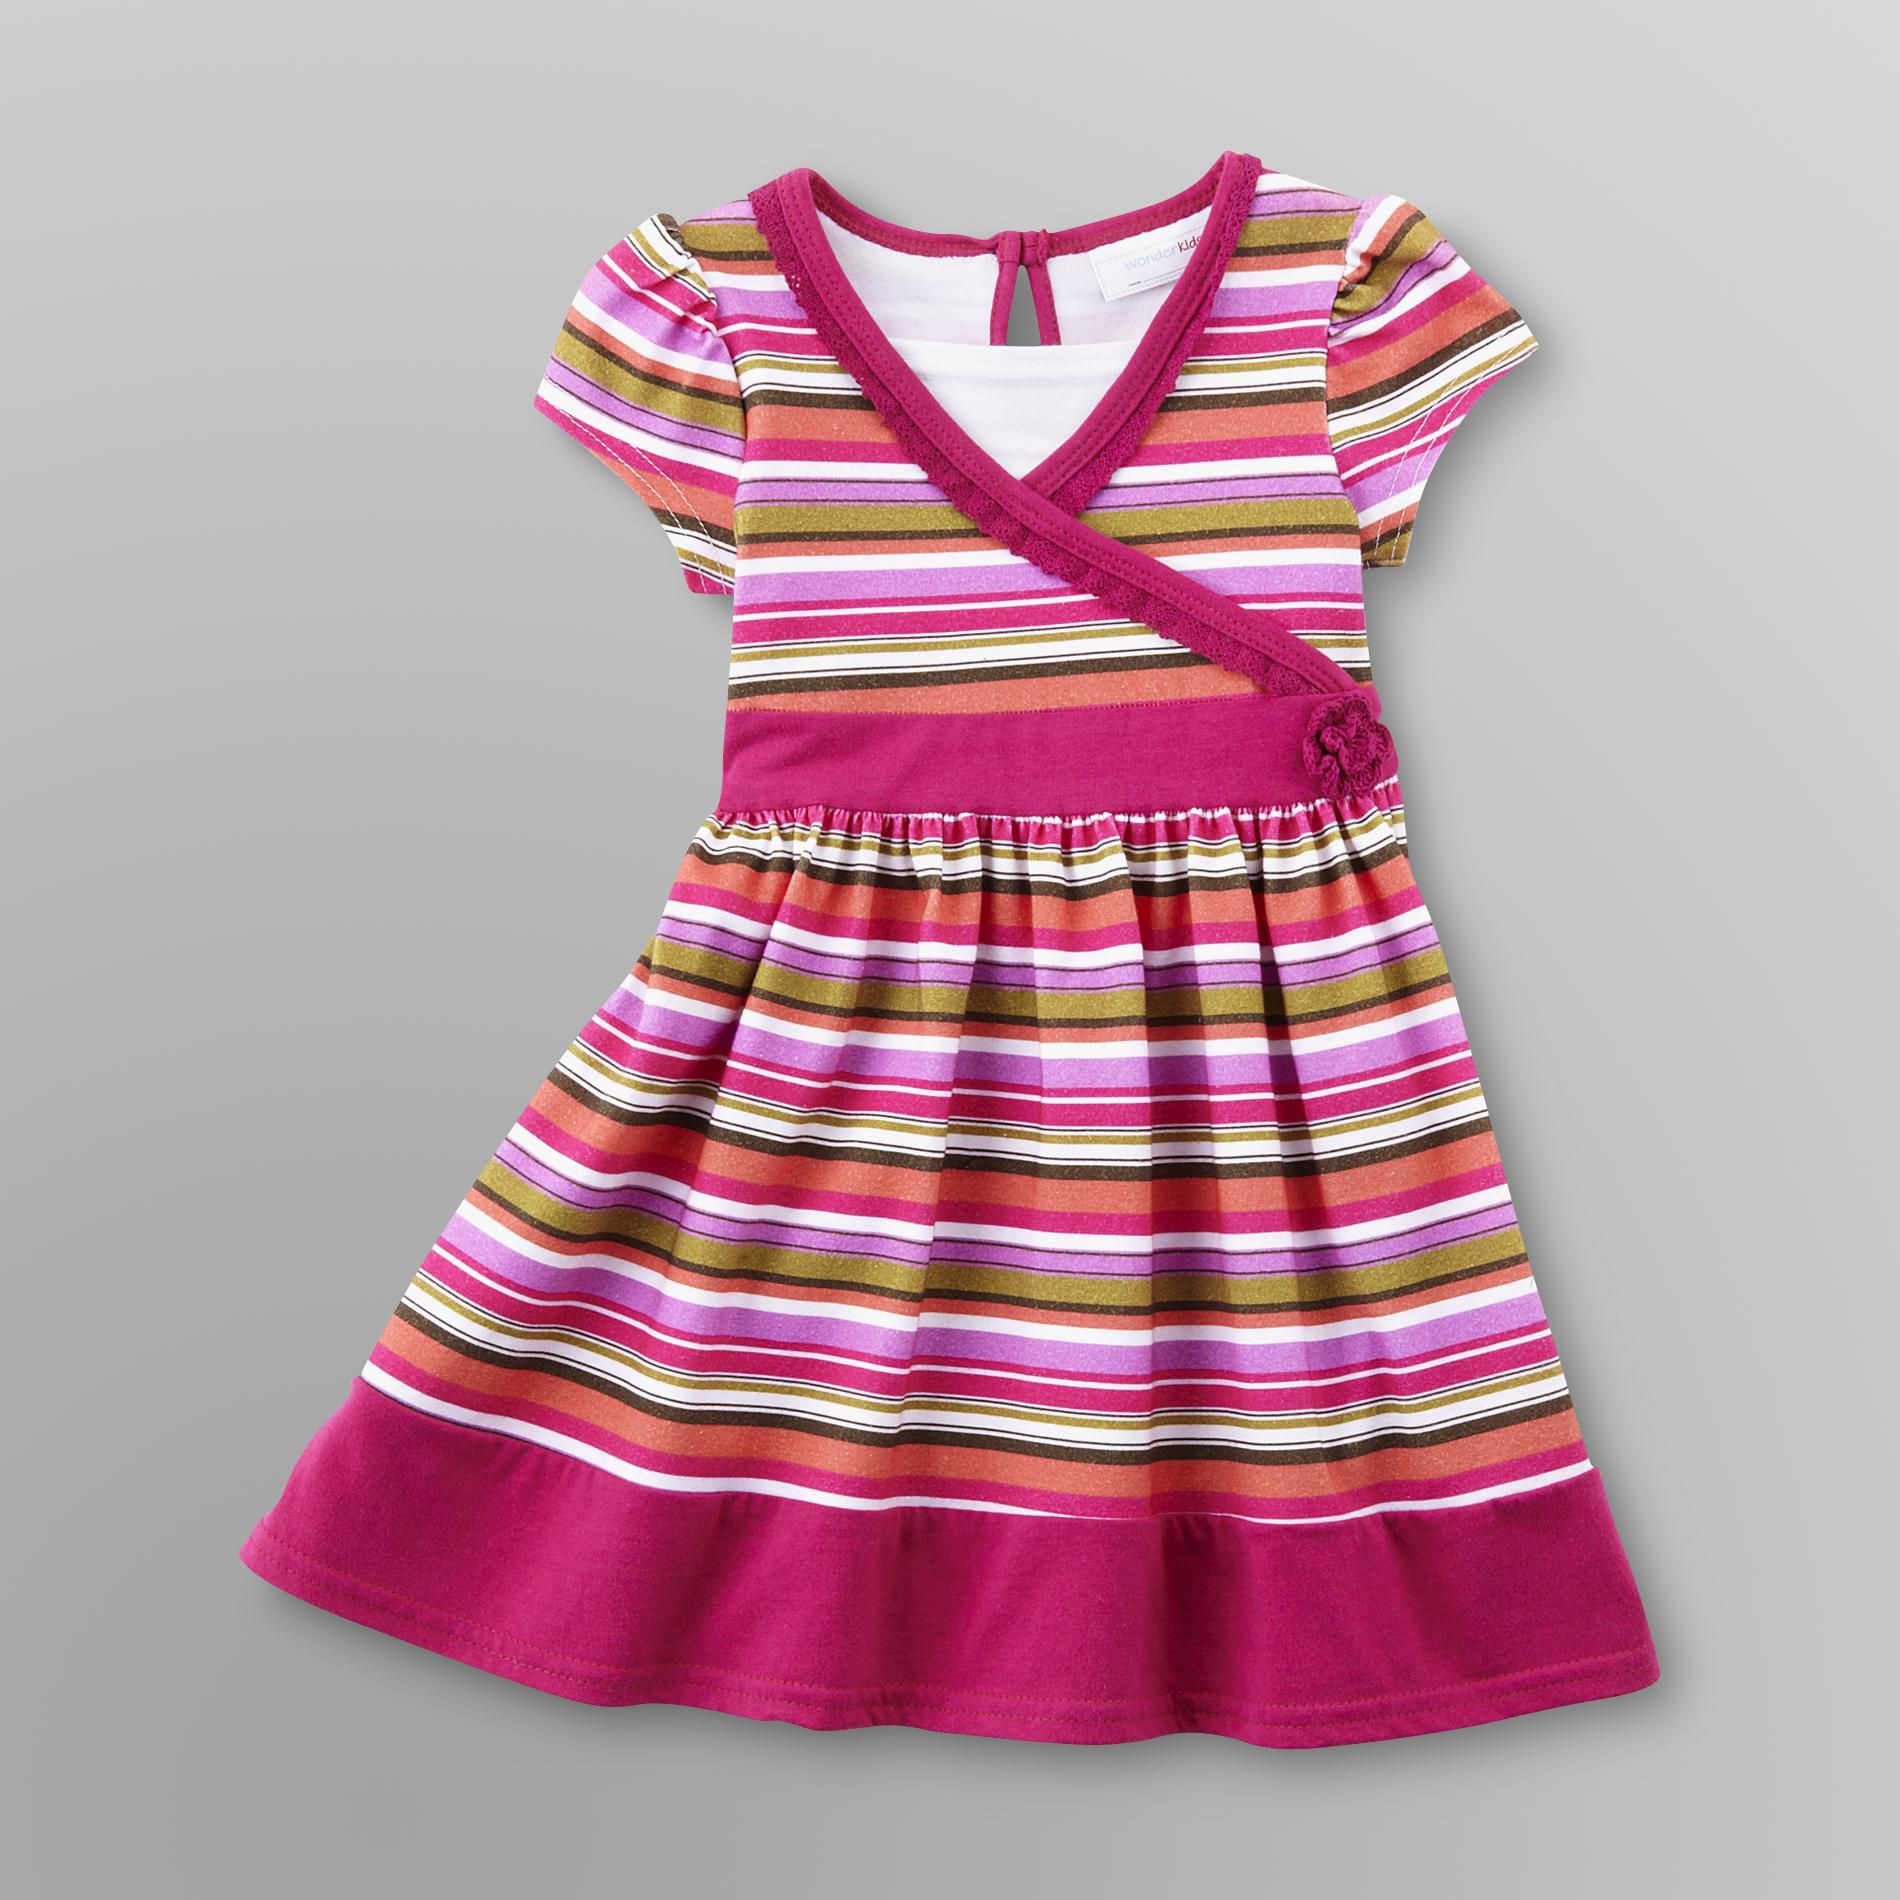 WonderKids Toddler Girl's Striped Dress